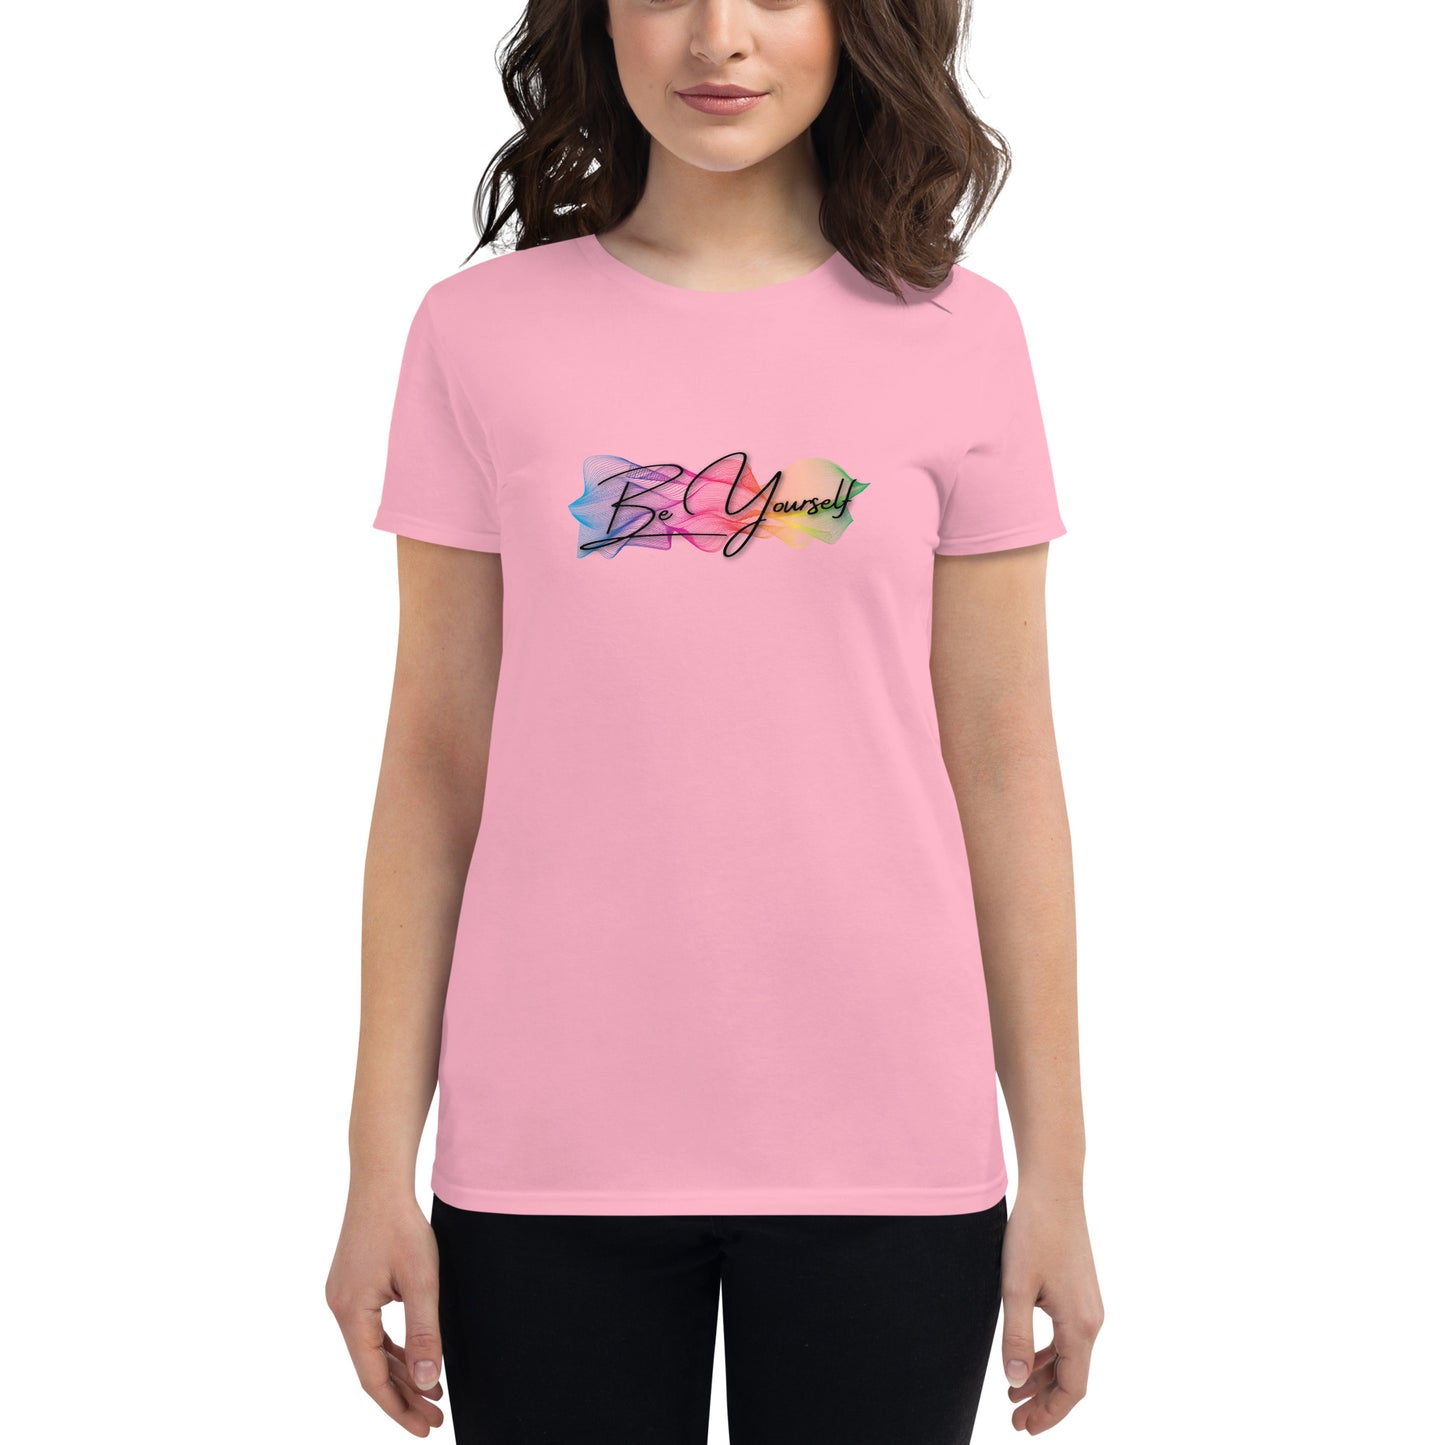 Be Yourself - Women's short sleeve t-shirt